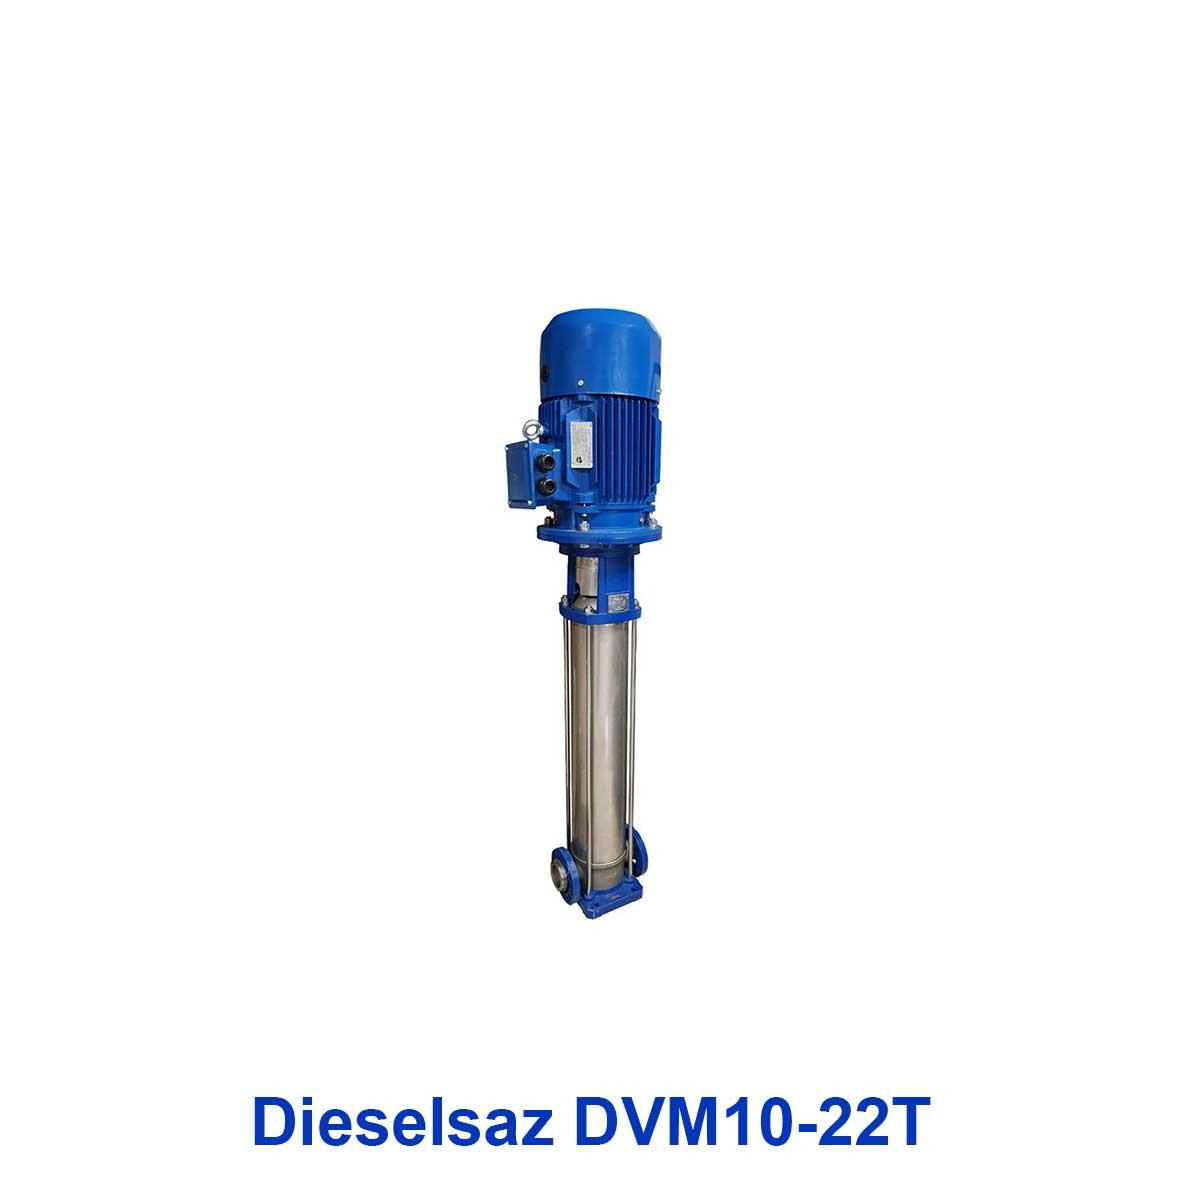 waterpump-vertical-Dieselsaz-DVM10-22T